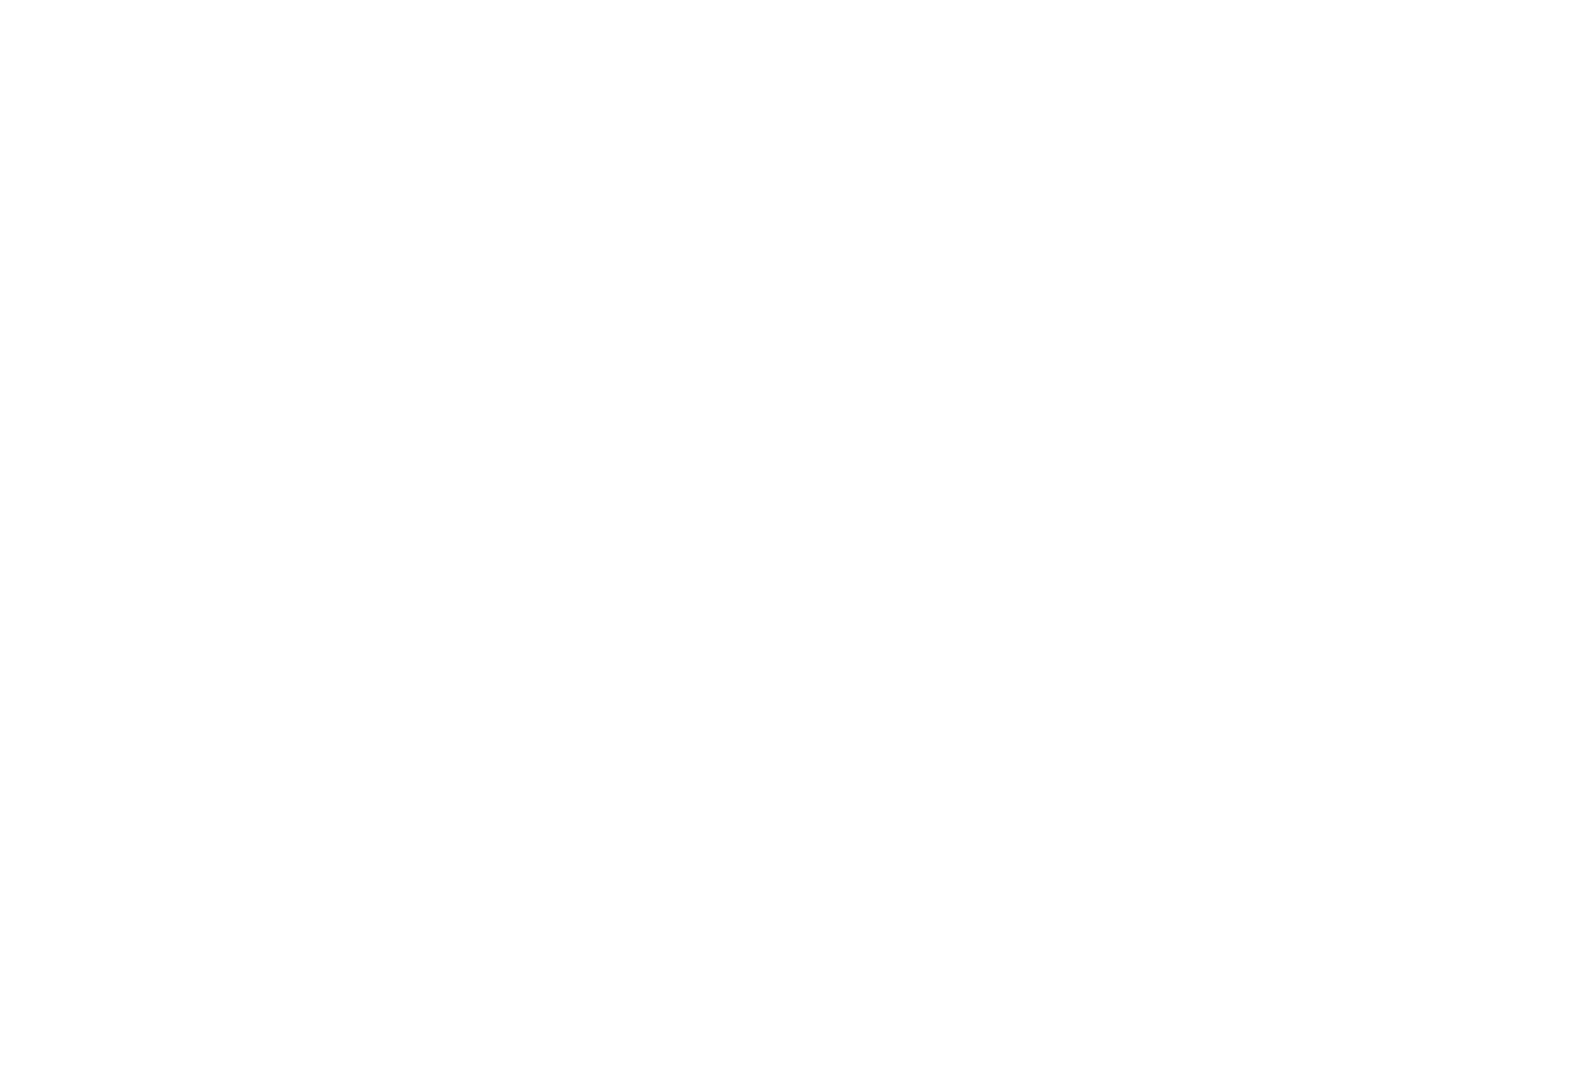 Intelpower